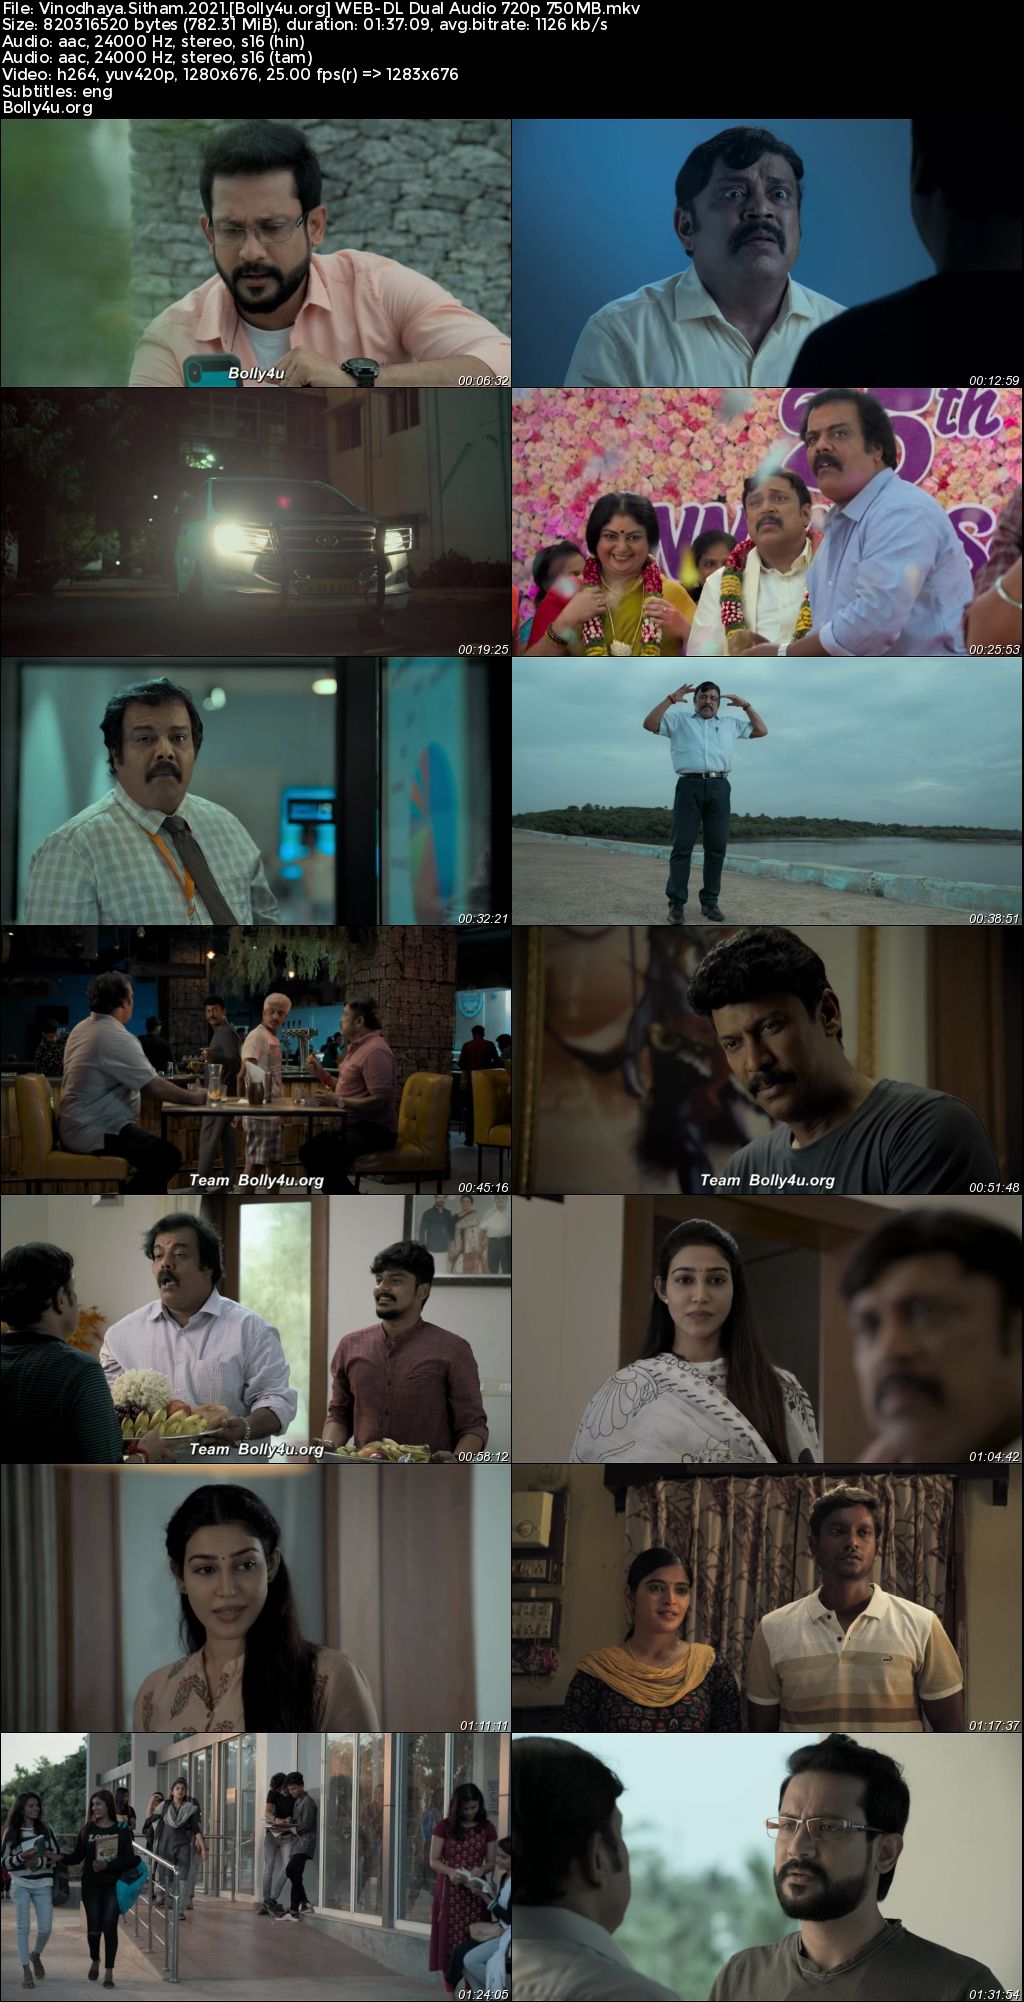 Vinodhaya Sitham 2021 WEB-DL UNCUT Hindi Dual Audio ORG Full Movie Download 1080p 720p 480p